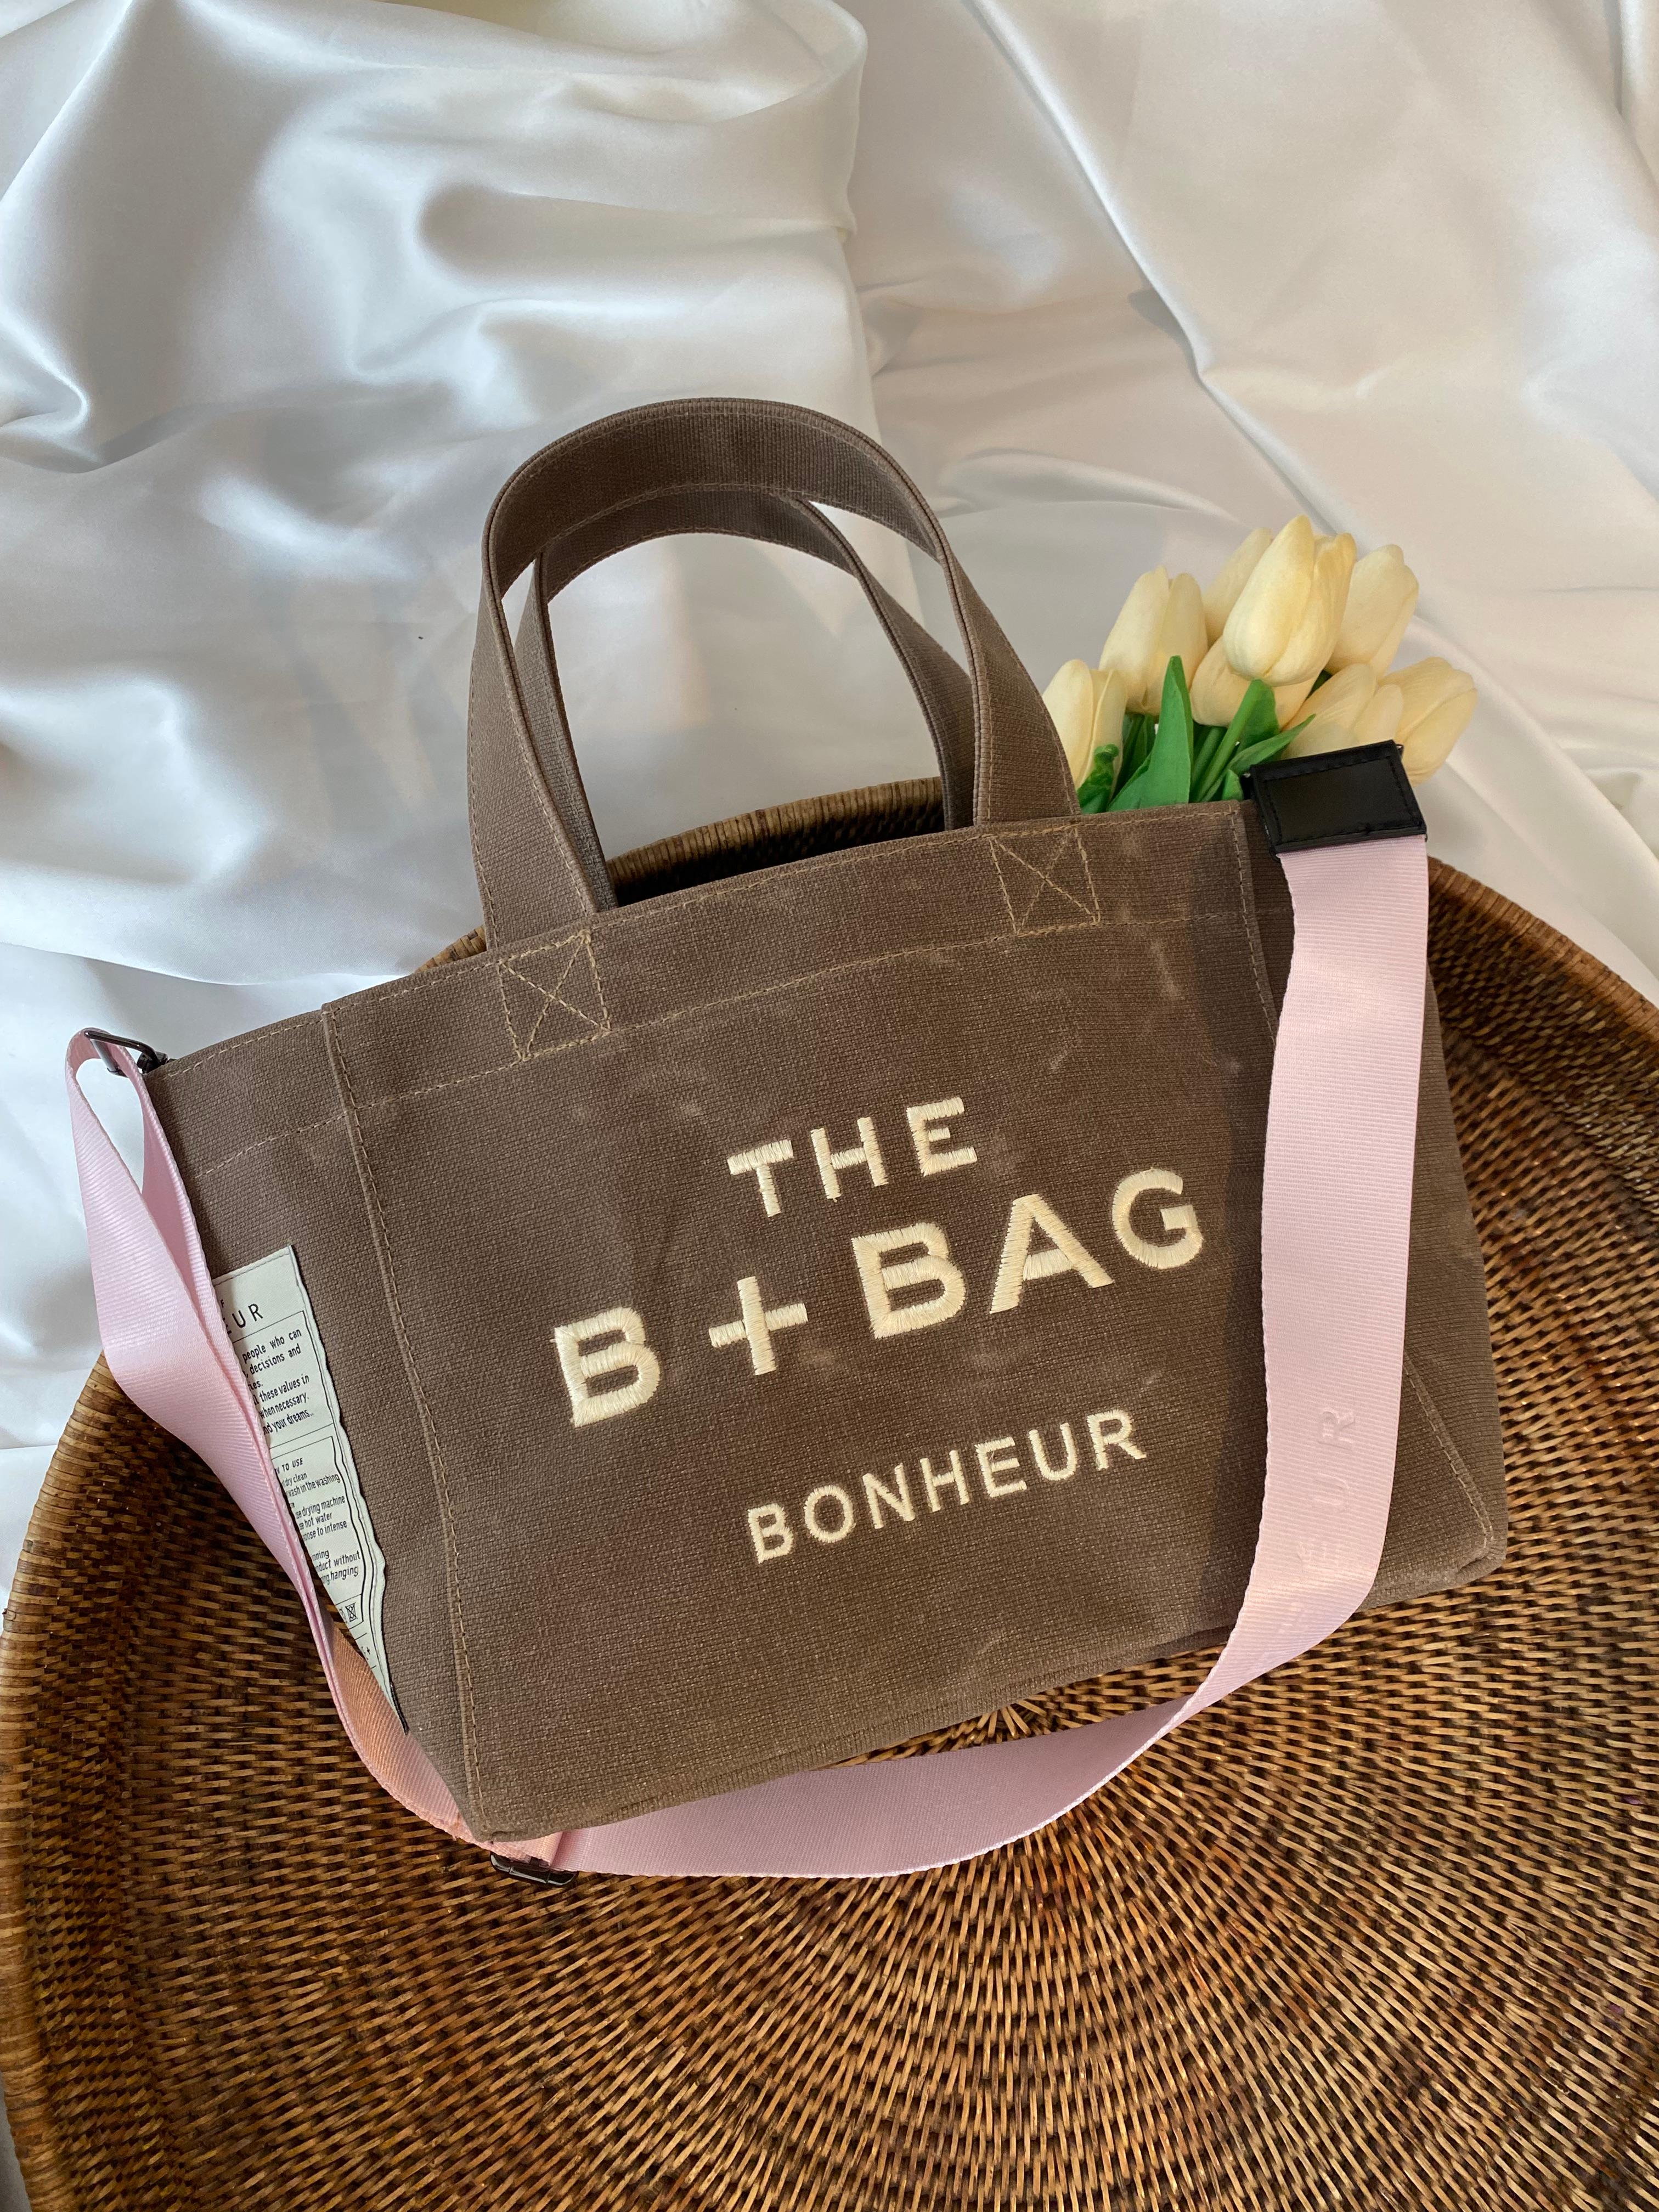 Bonheur B+BAG Chocolate Malt